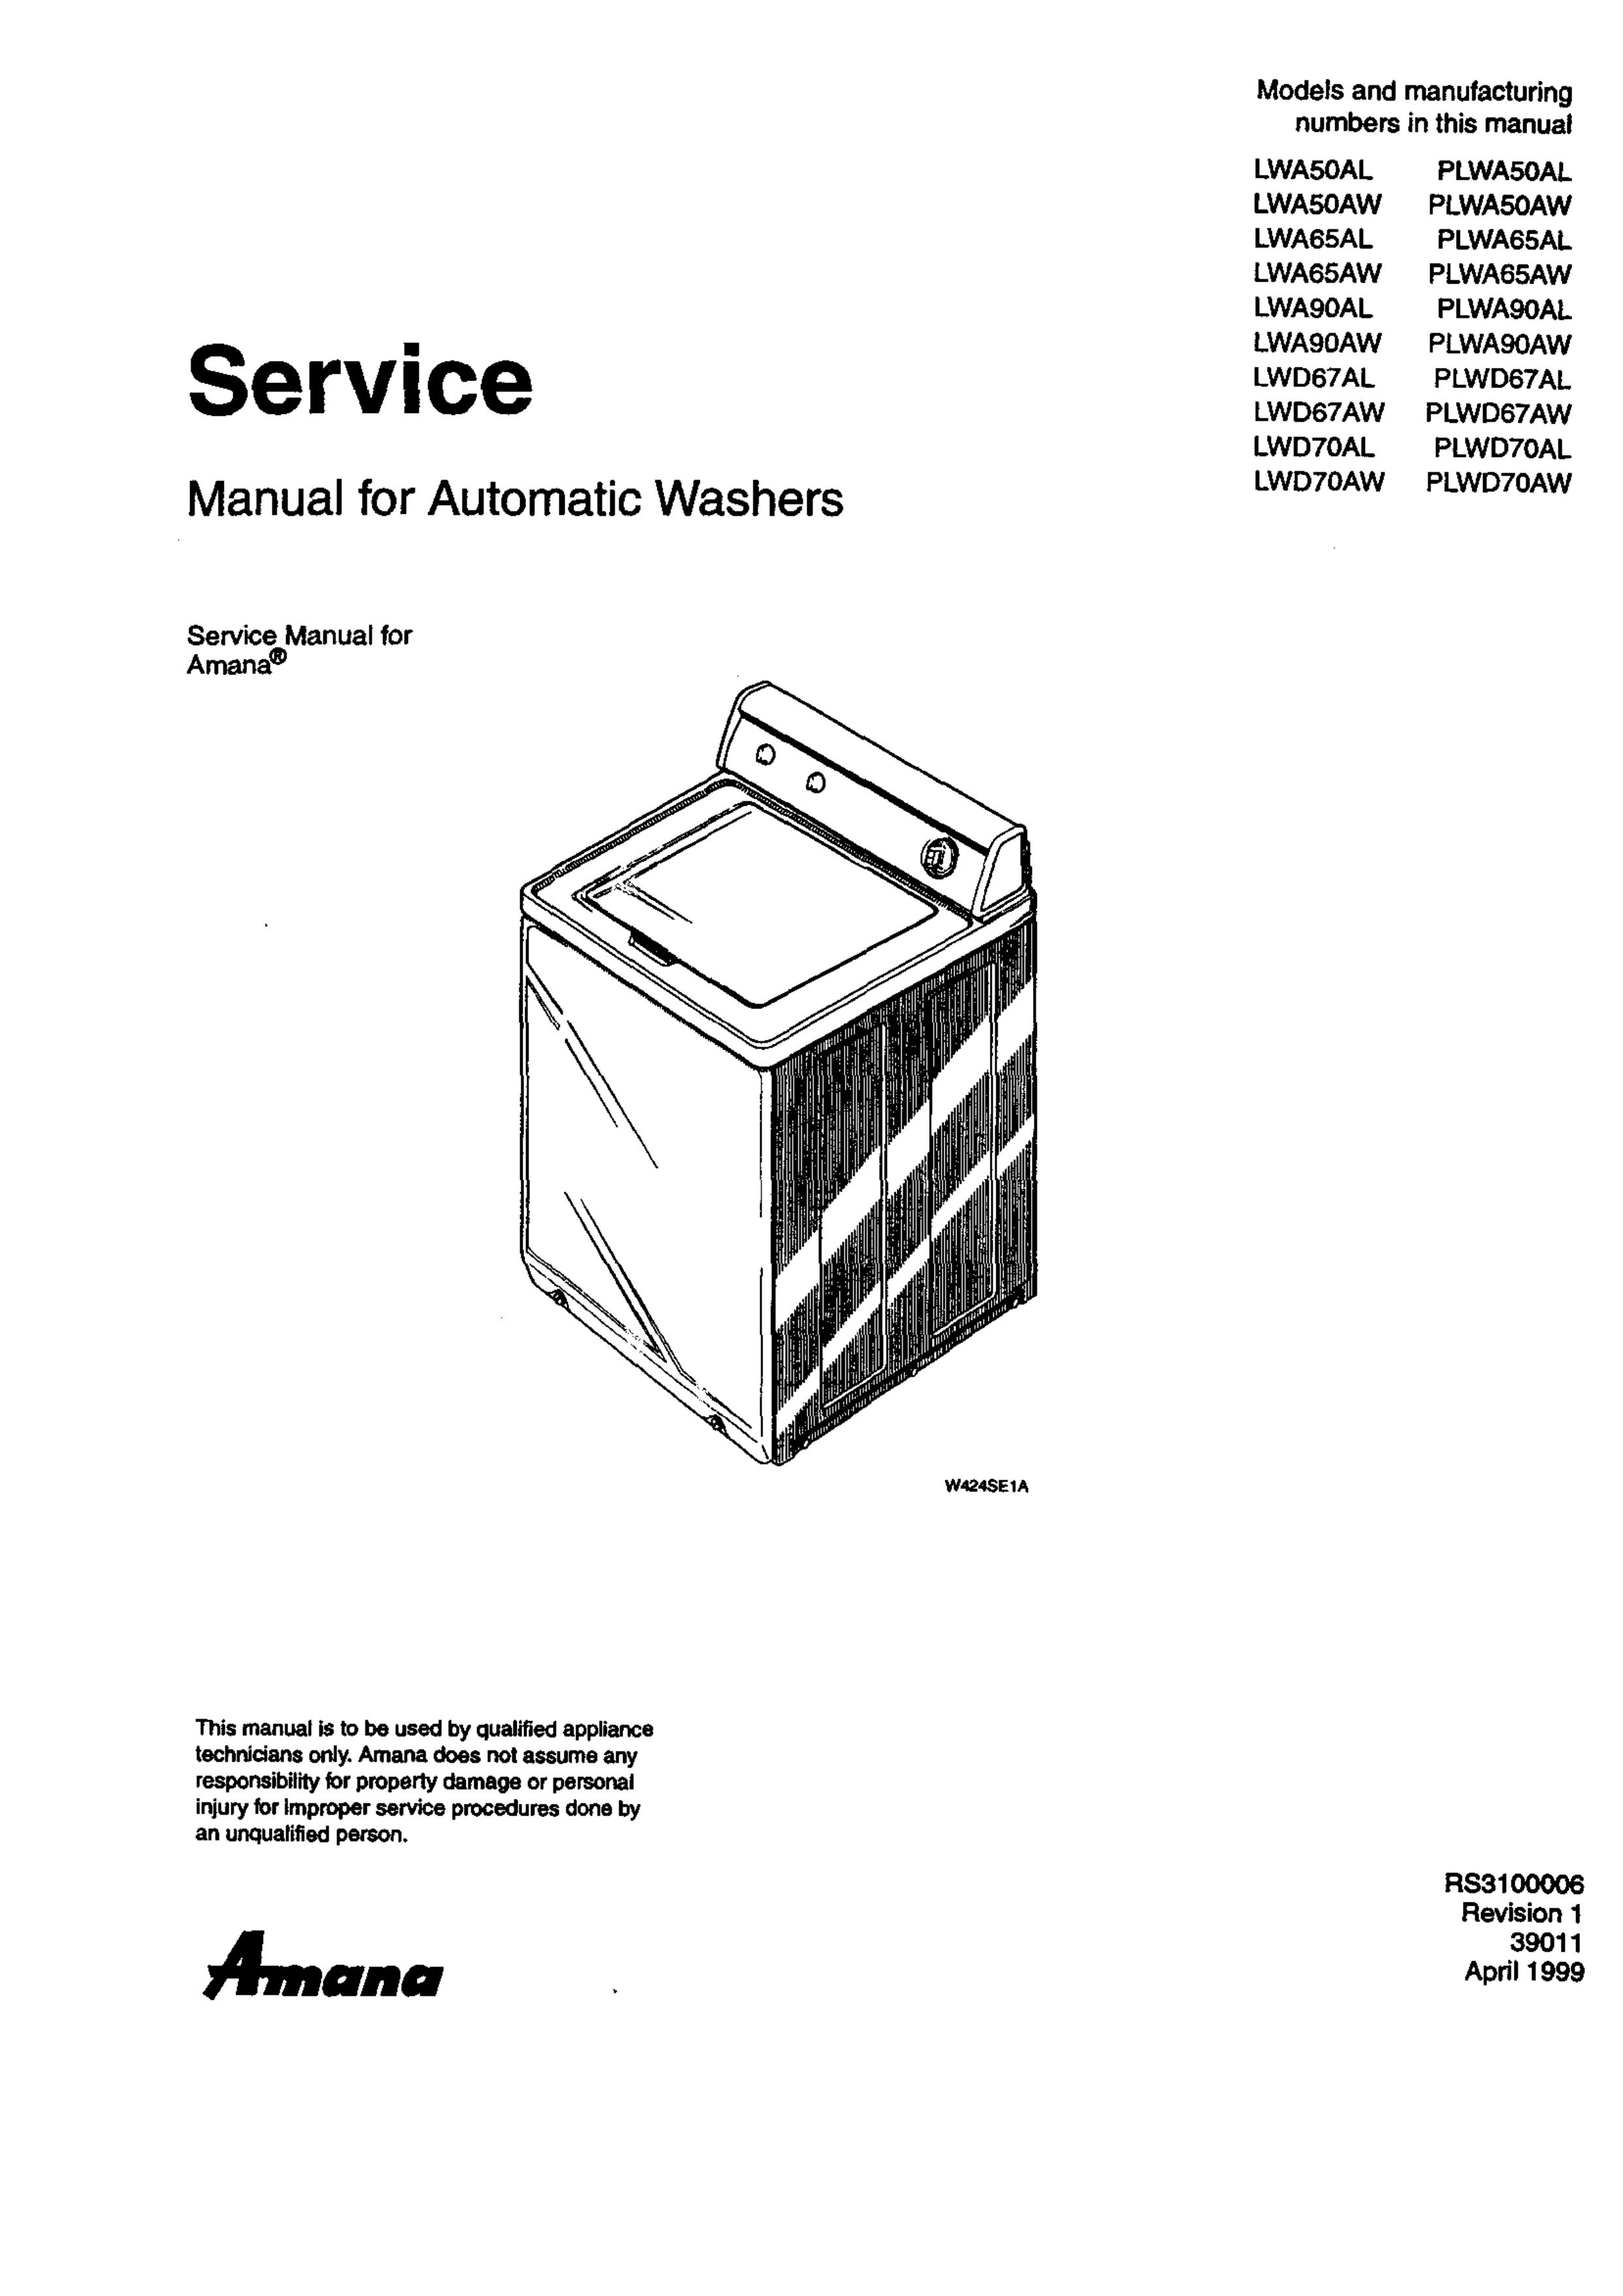 Amana LWD70AL PLWDTOAL Washer User Manual